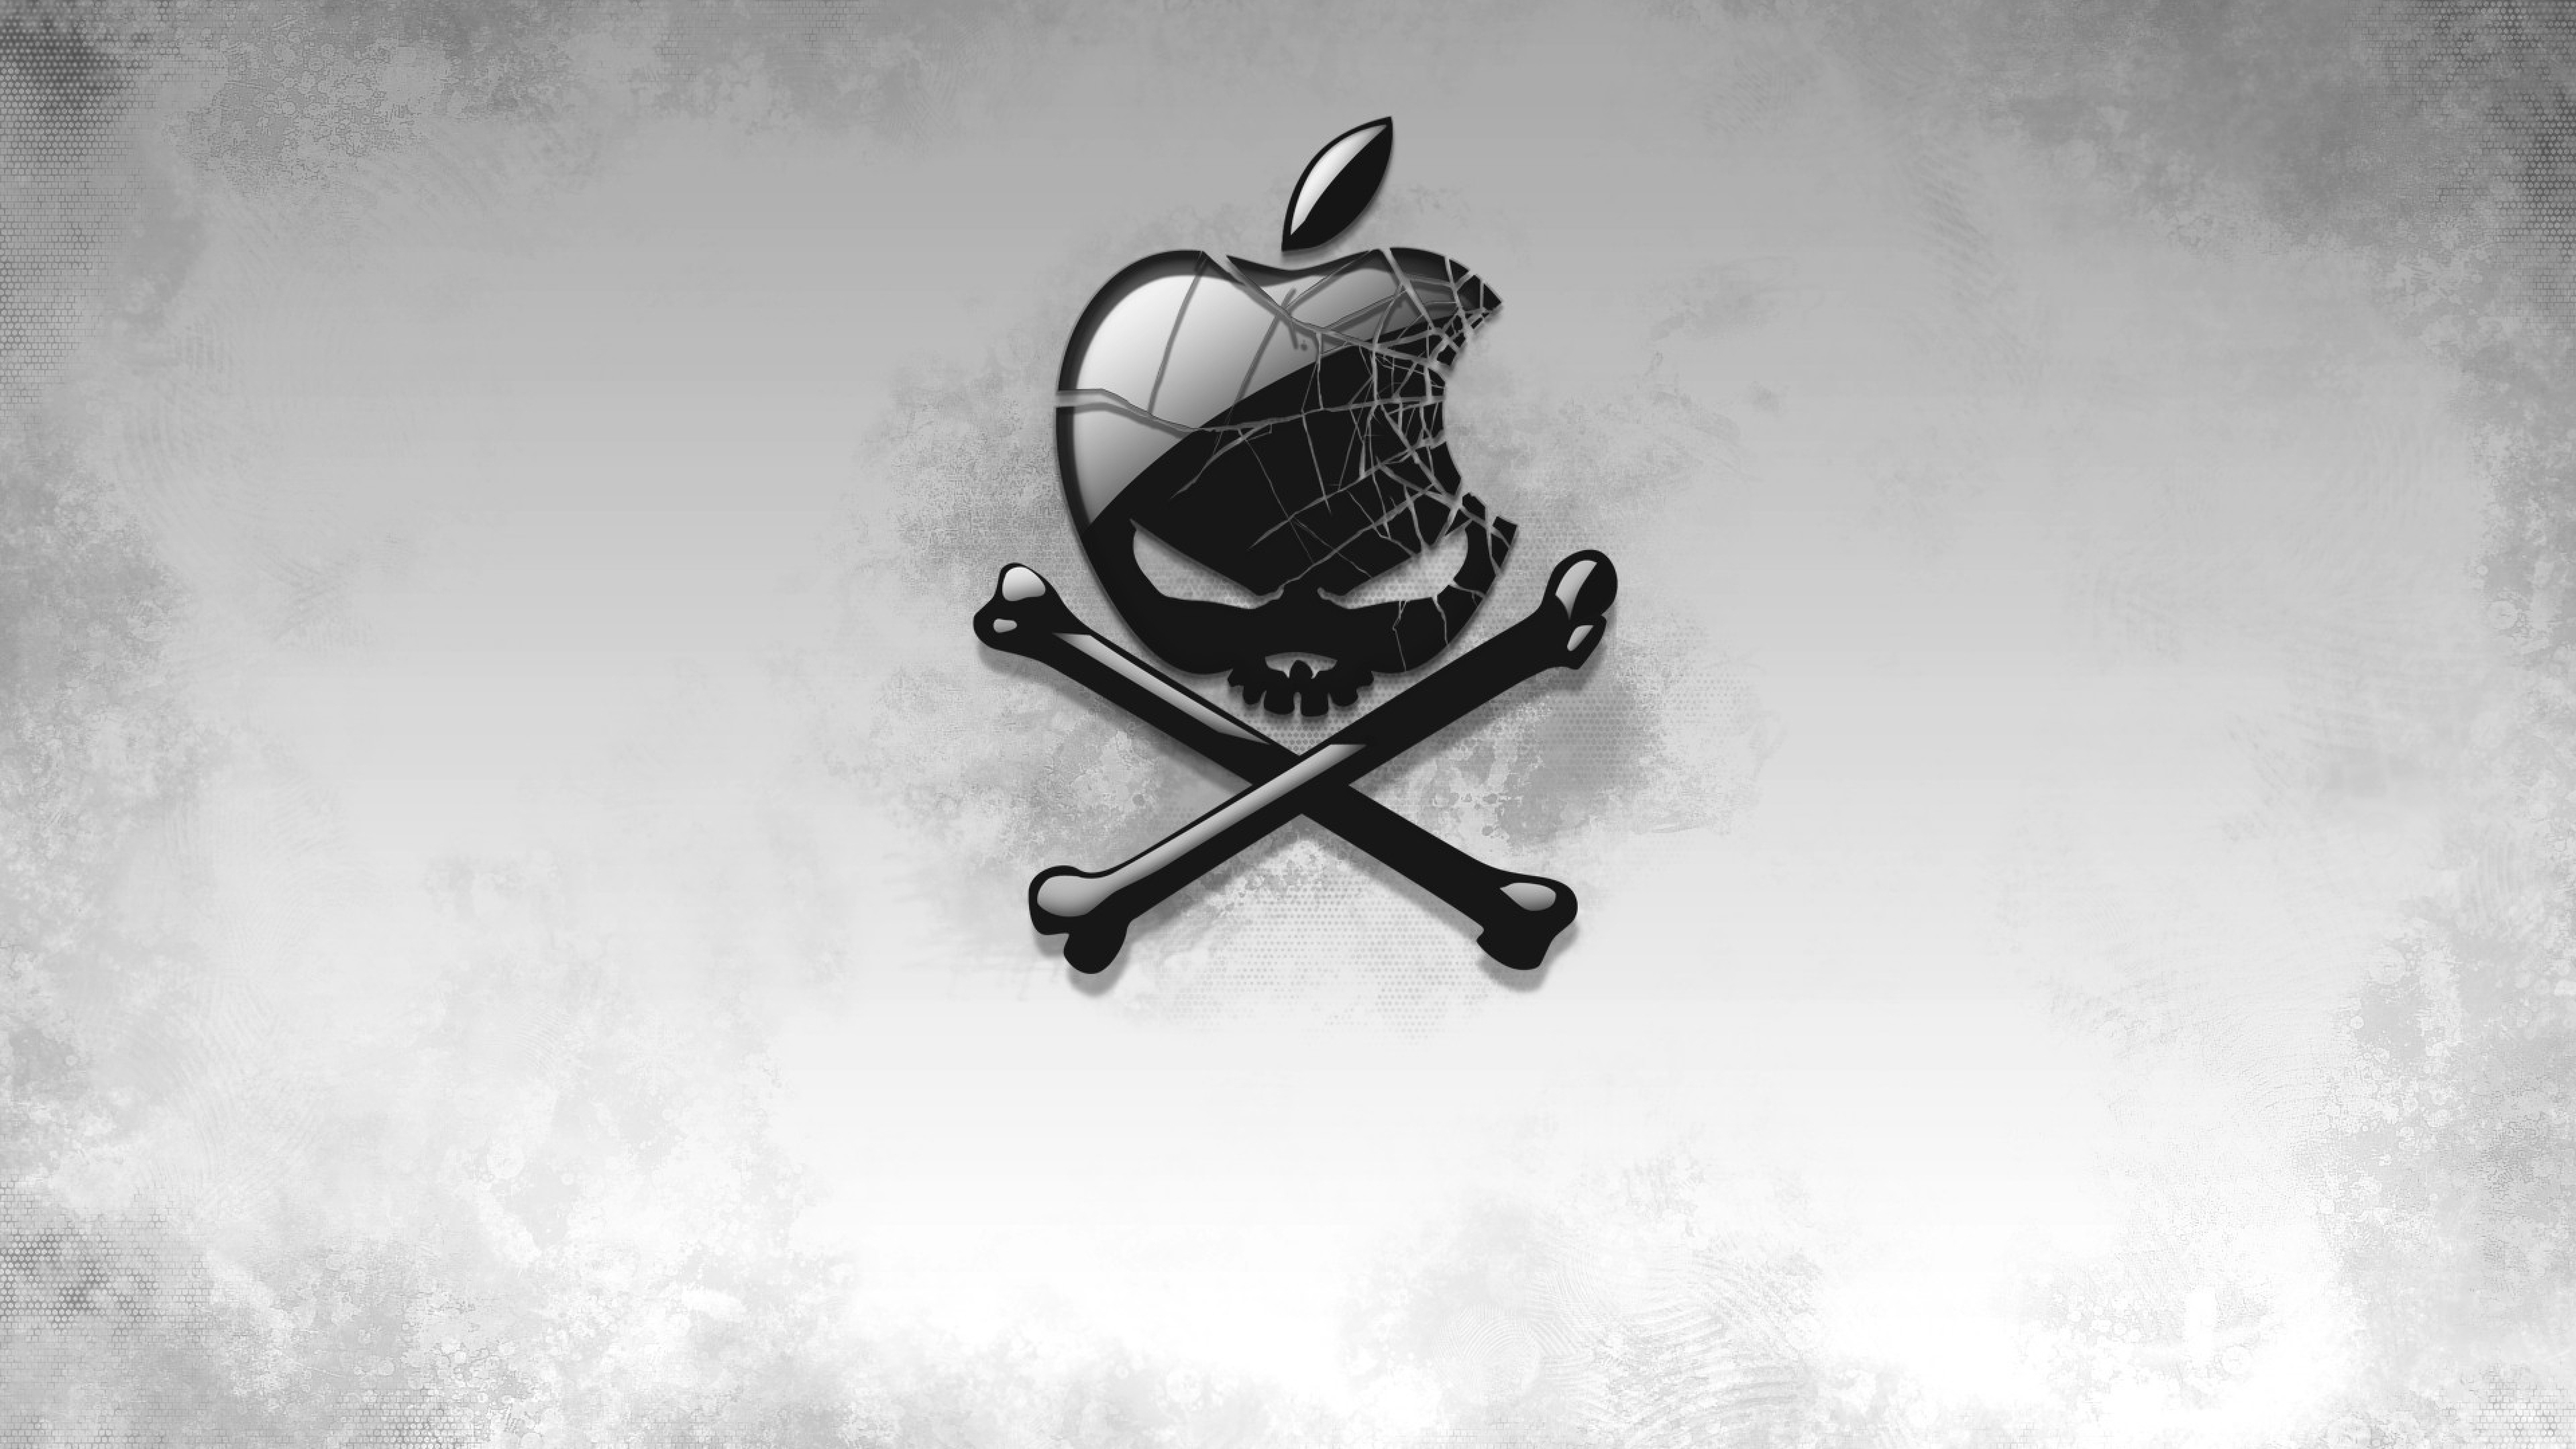 black apple skull 4k 1540748631 - Black Apple Skull 4k - skull wallpapers, black wallpapers, artist wallpapers, apple wallpapers